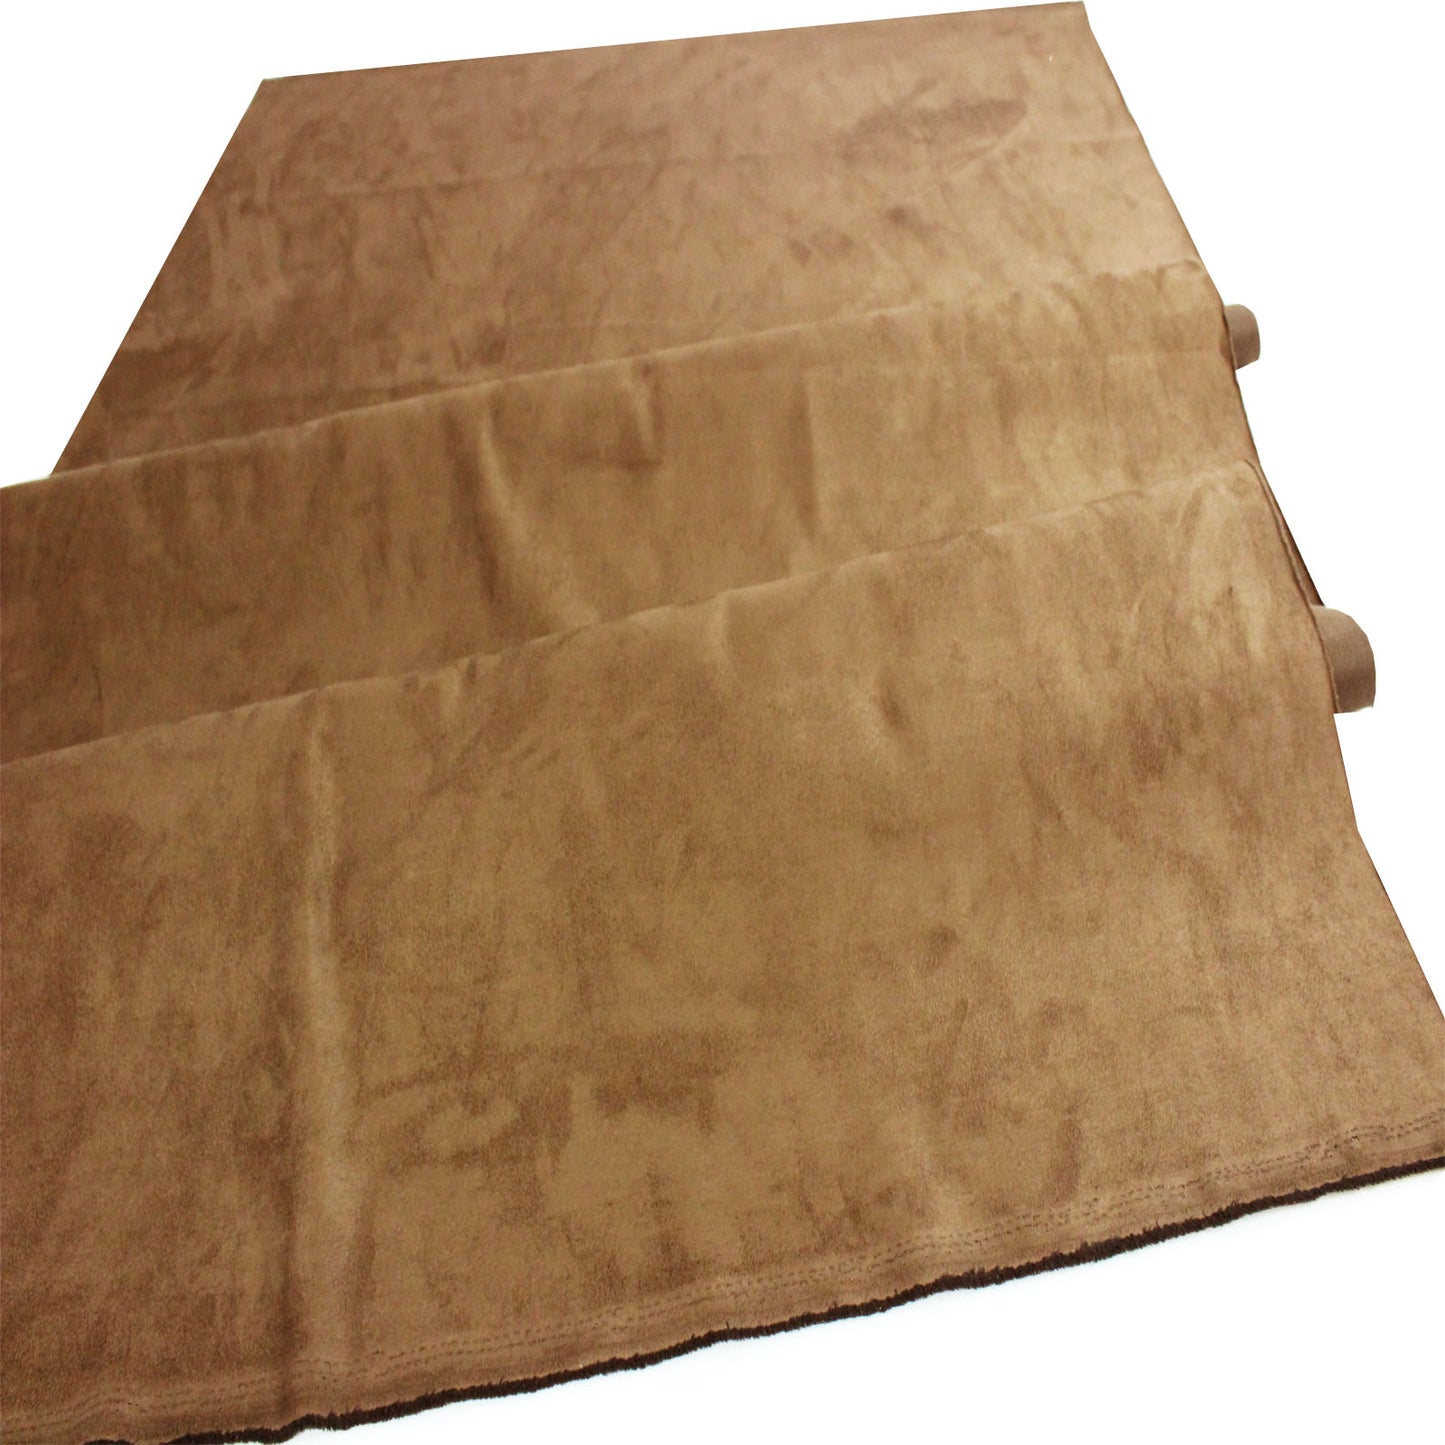 Buckskin Mocha Suede Microsuede Fabric Upholstery Drapery Fabric (10 yards)